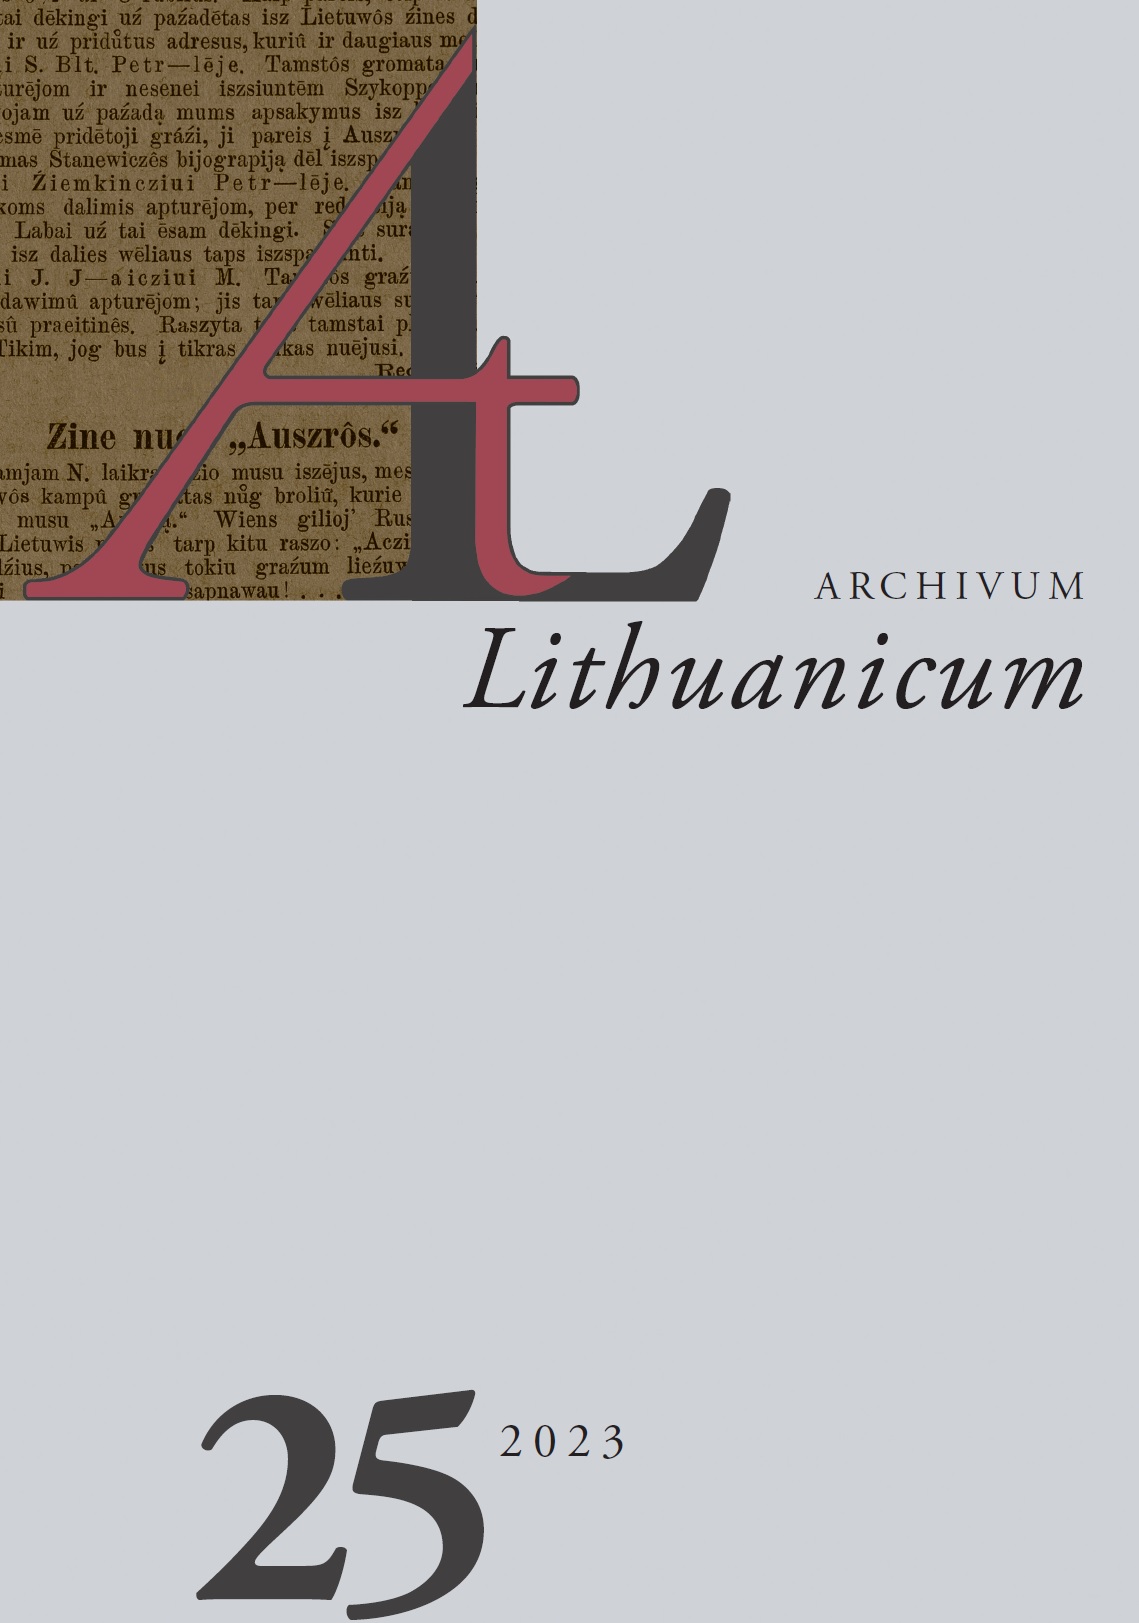 Archivum Lithuanicum cover